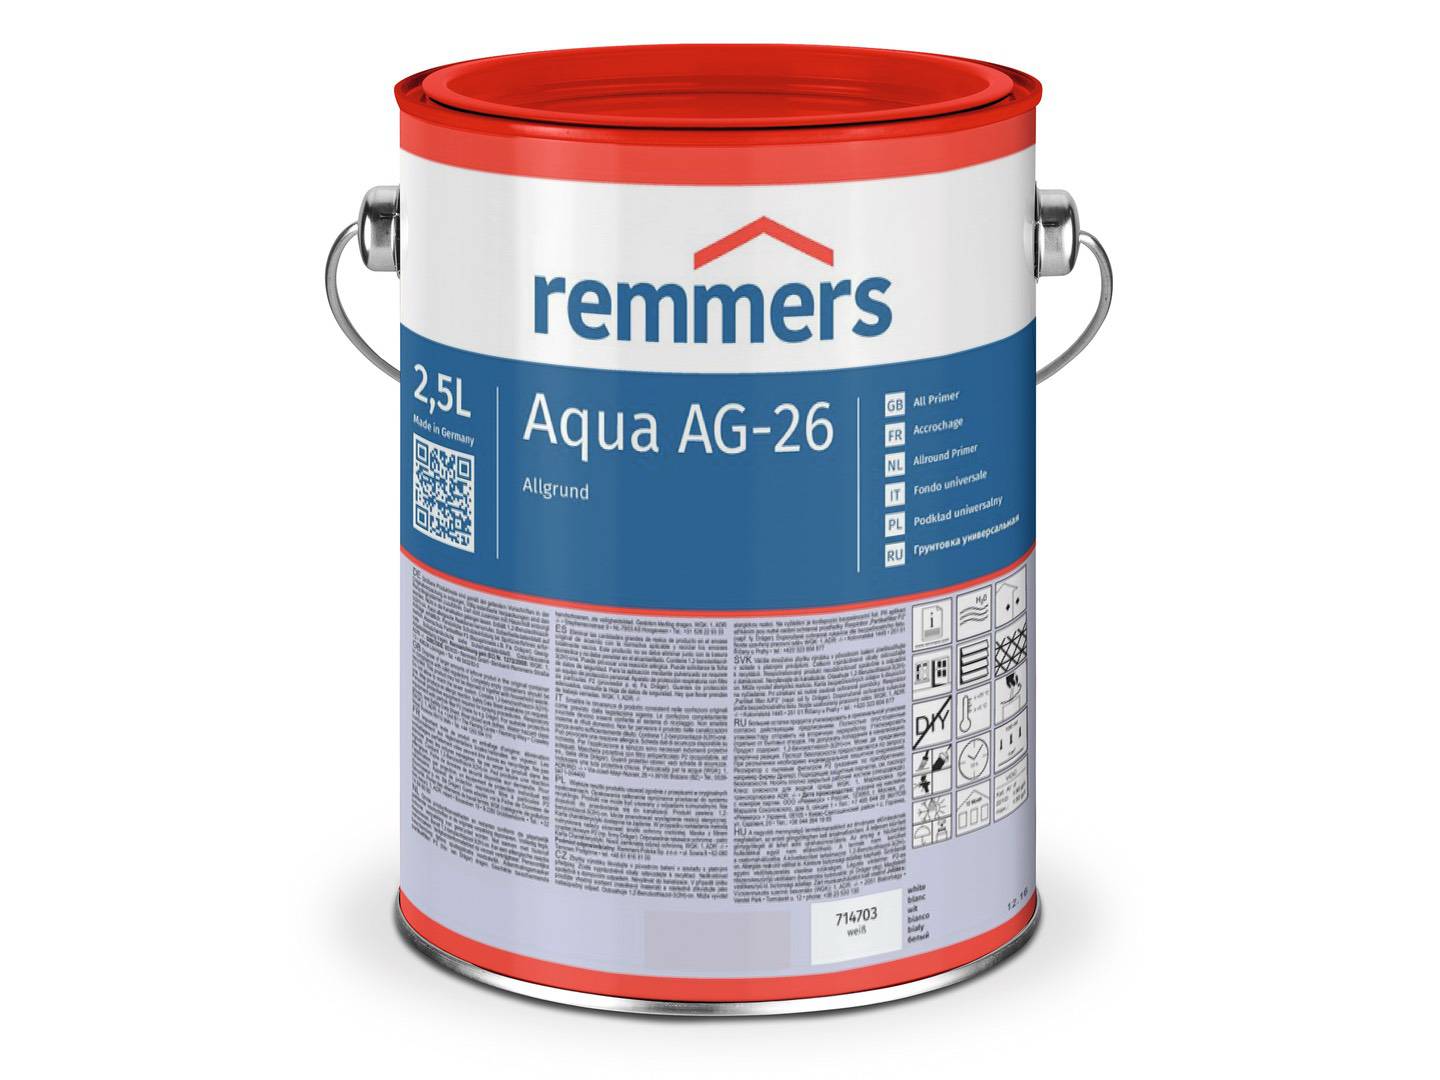 REMMERS Aqua AG-26-Allgrund